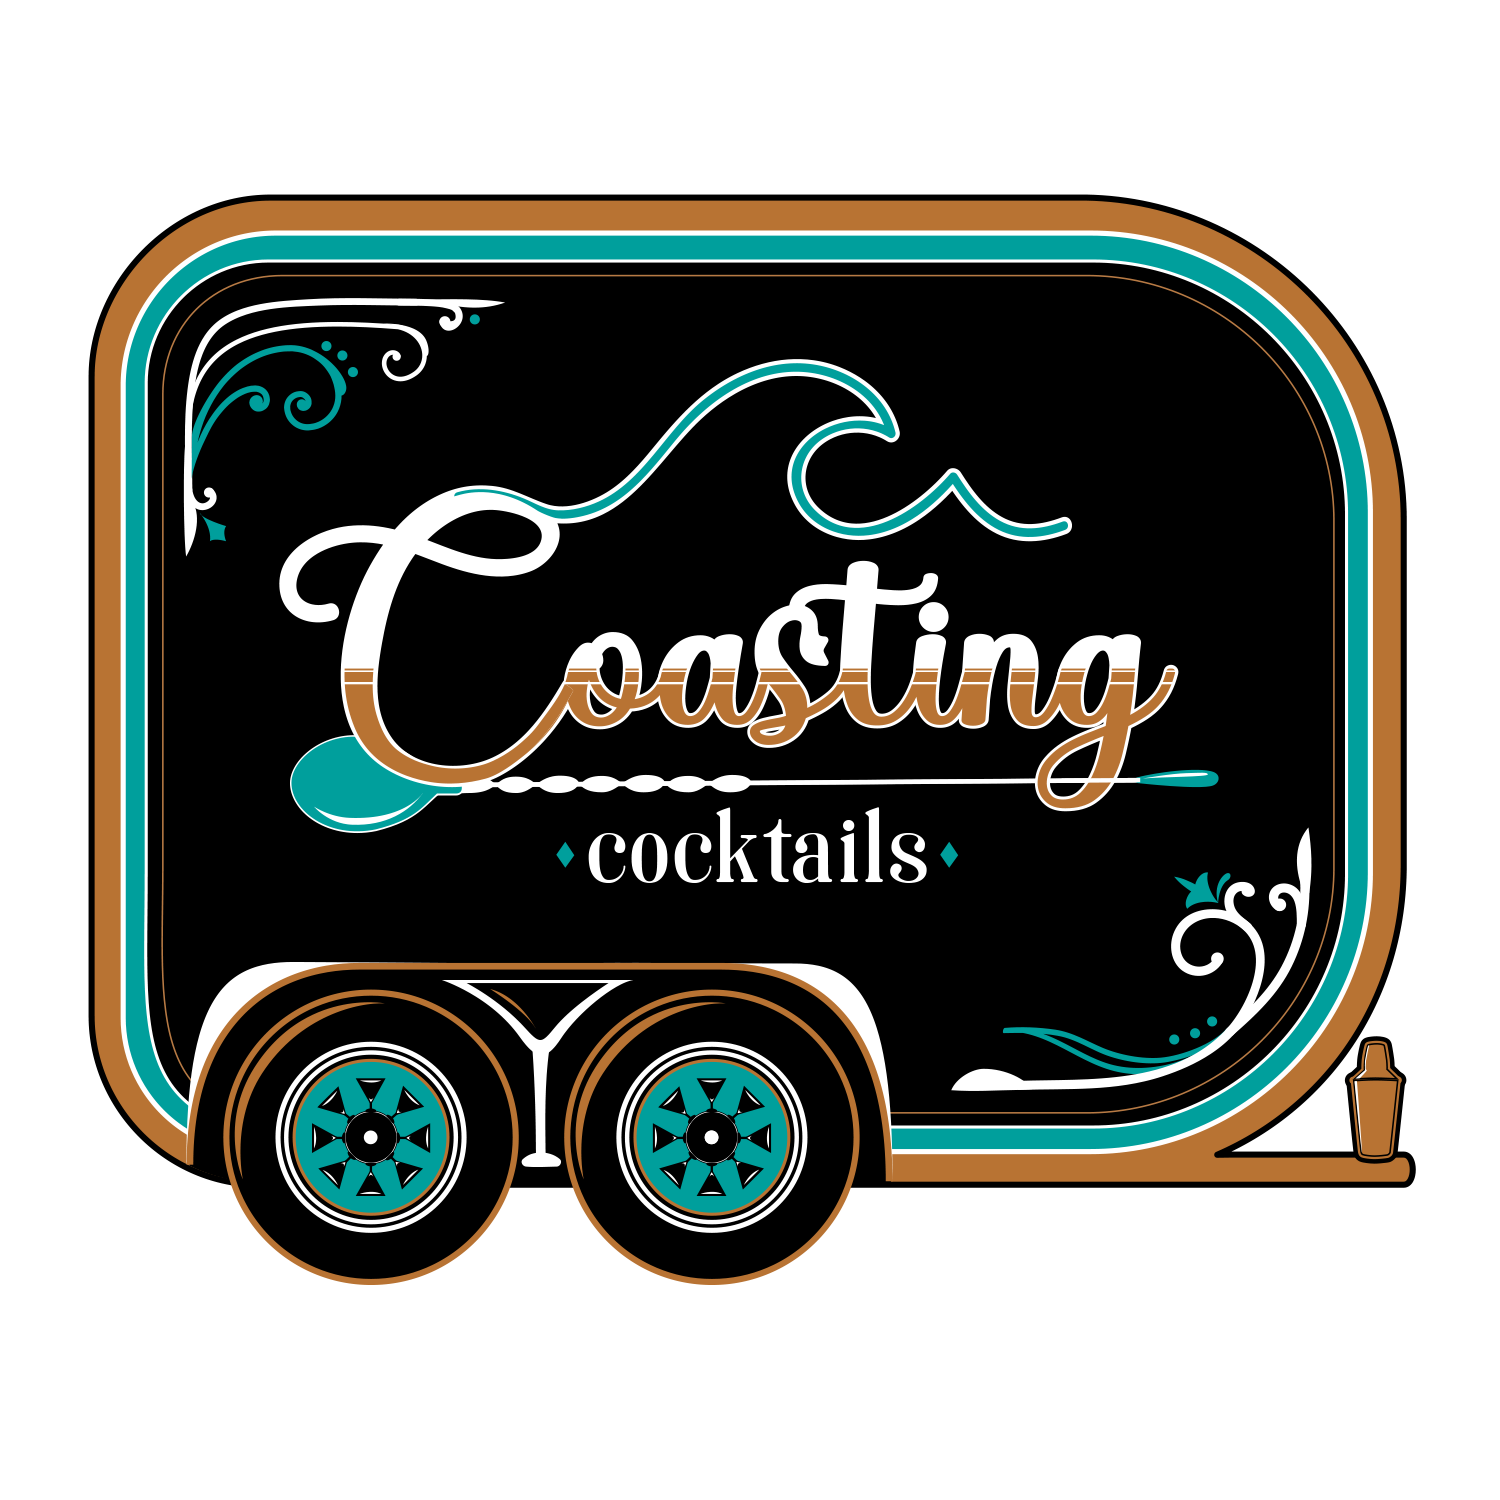 Coasting Cocktails 